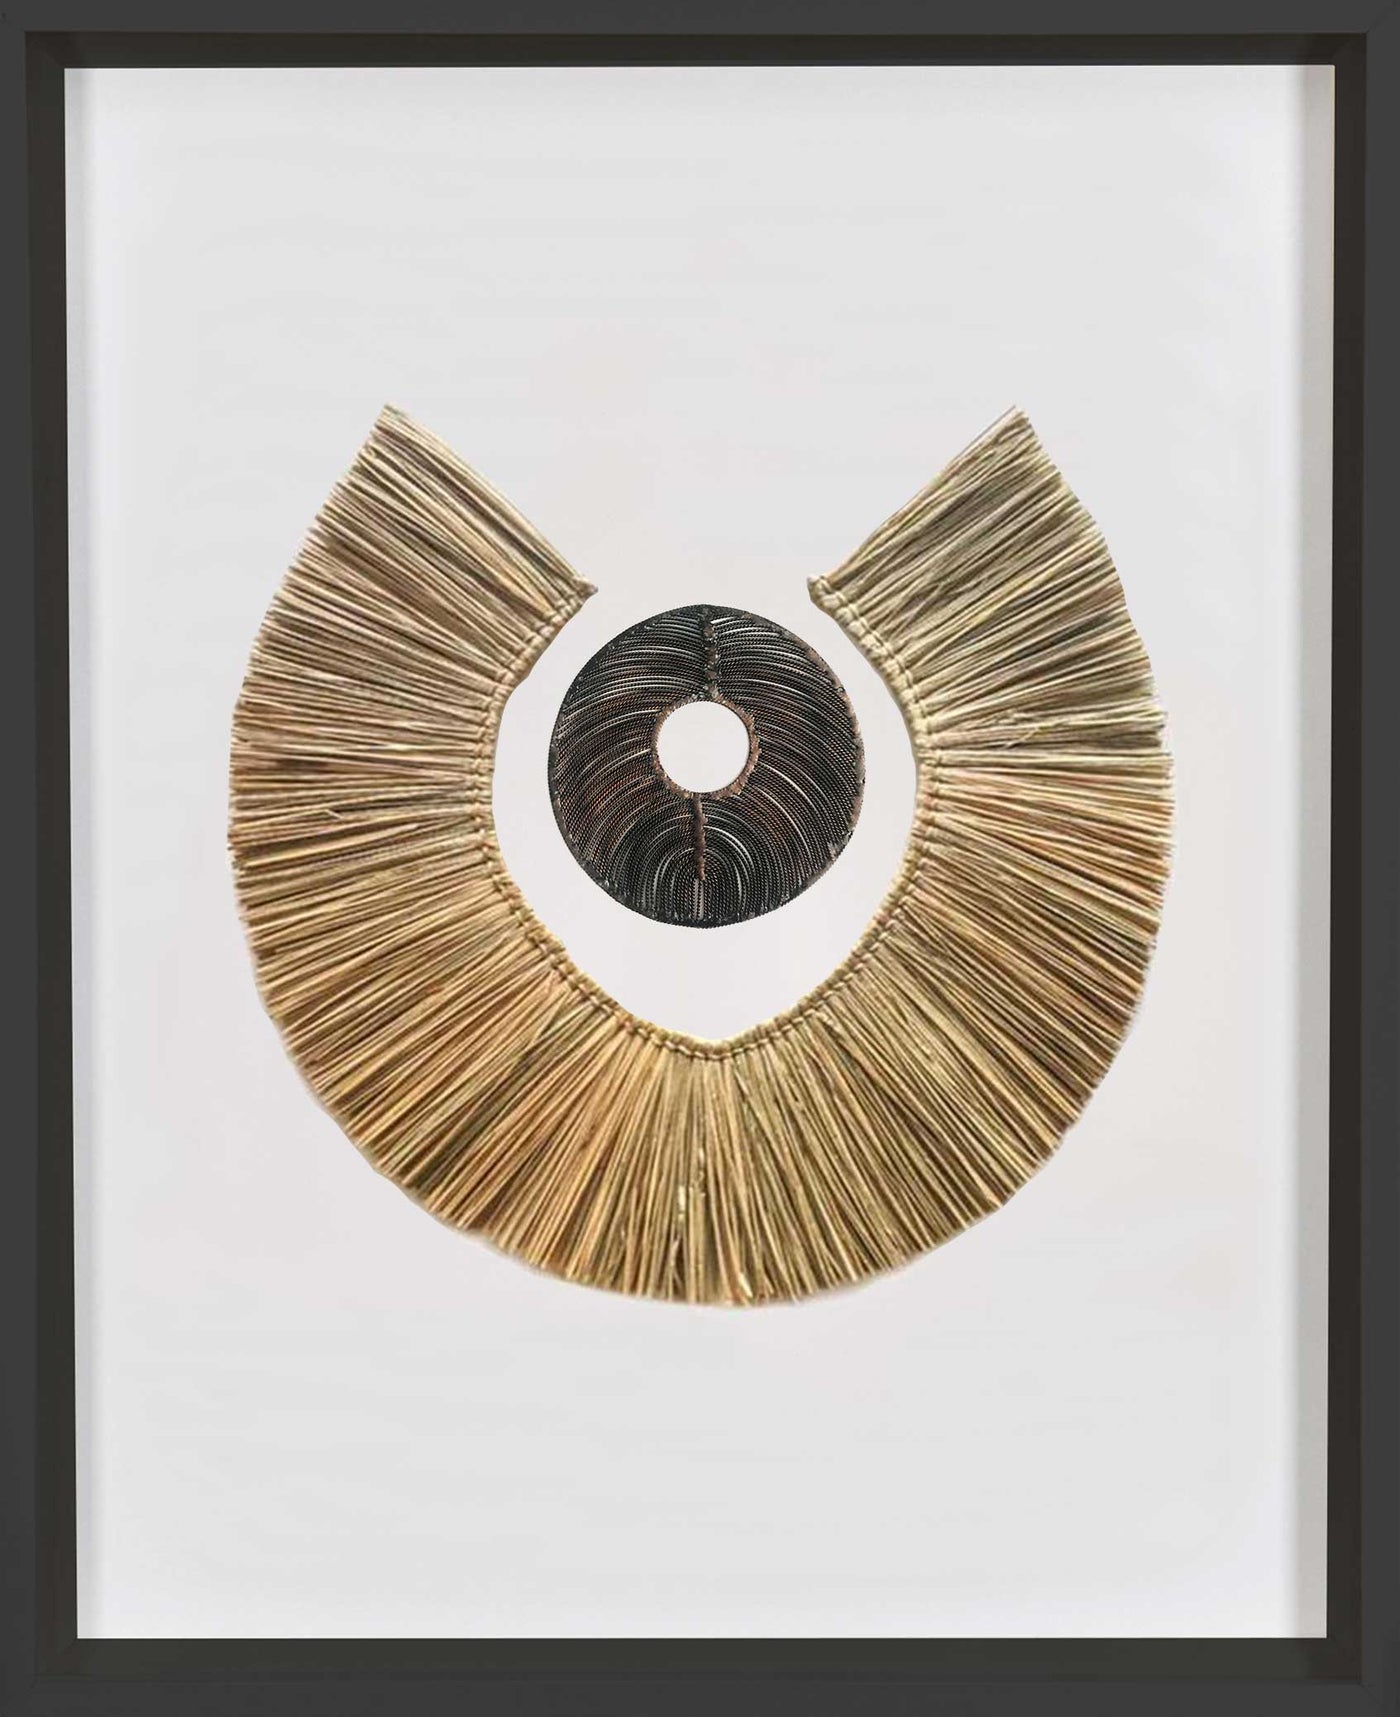 African Disc Copper & Grass Ring Artwork 67 x 85 cm